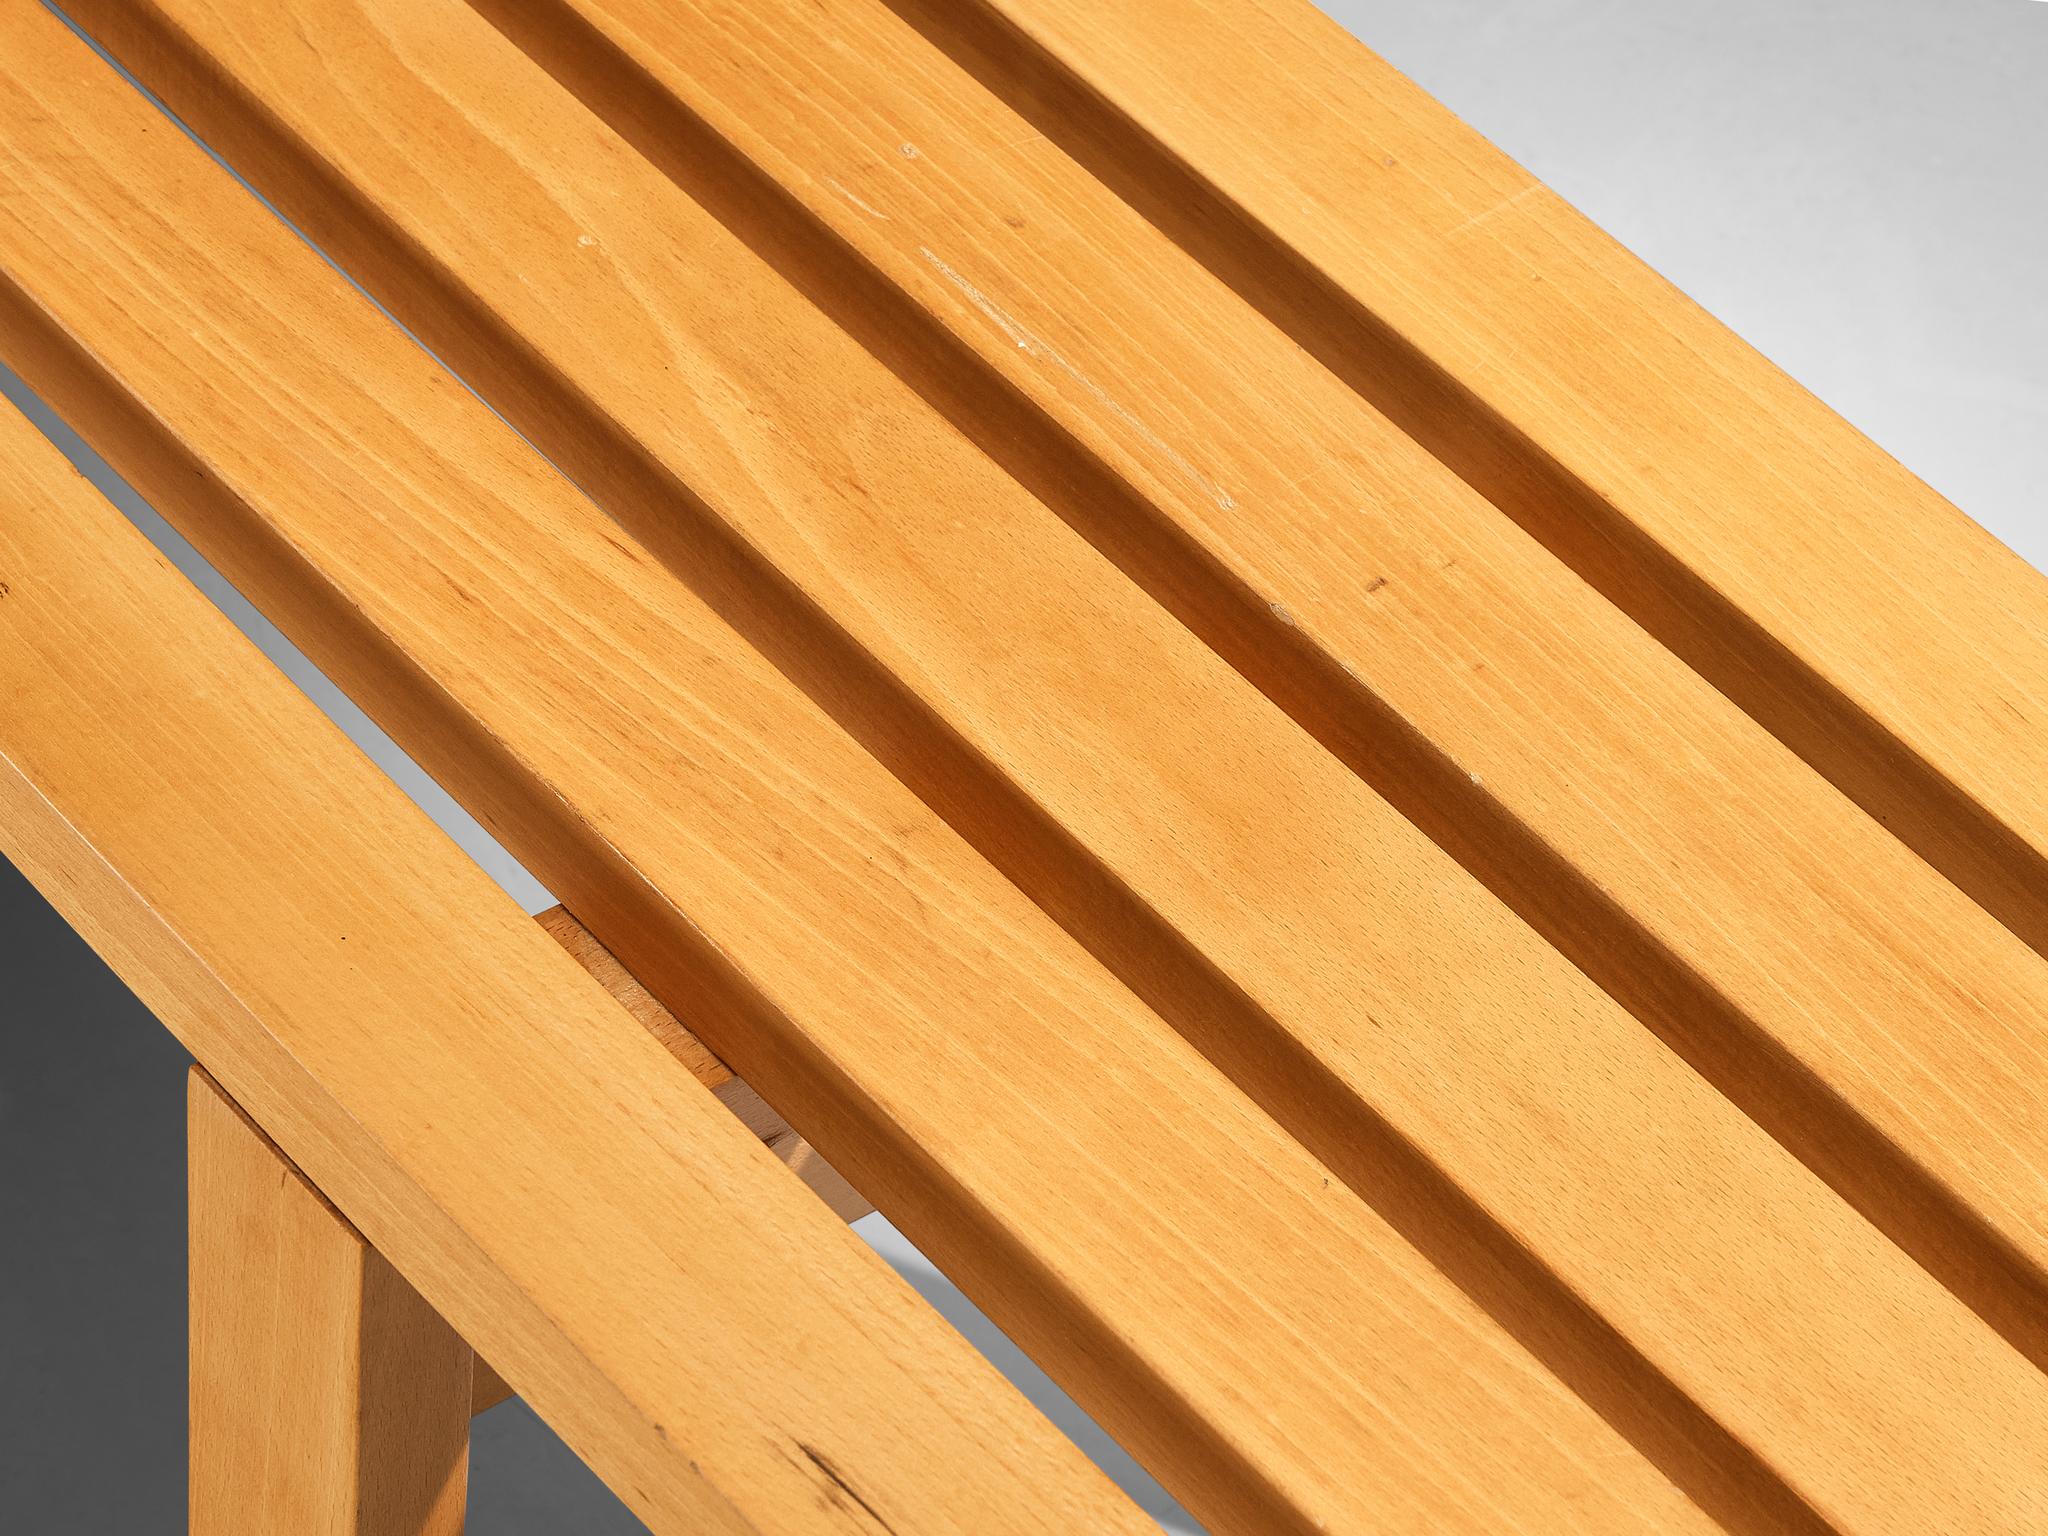 Scandinavian Slatted Bench in Solid Wood